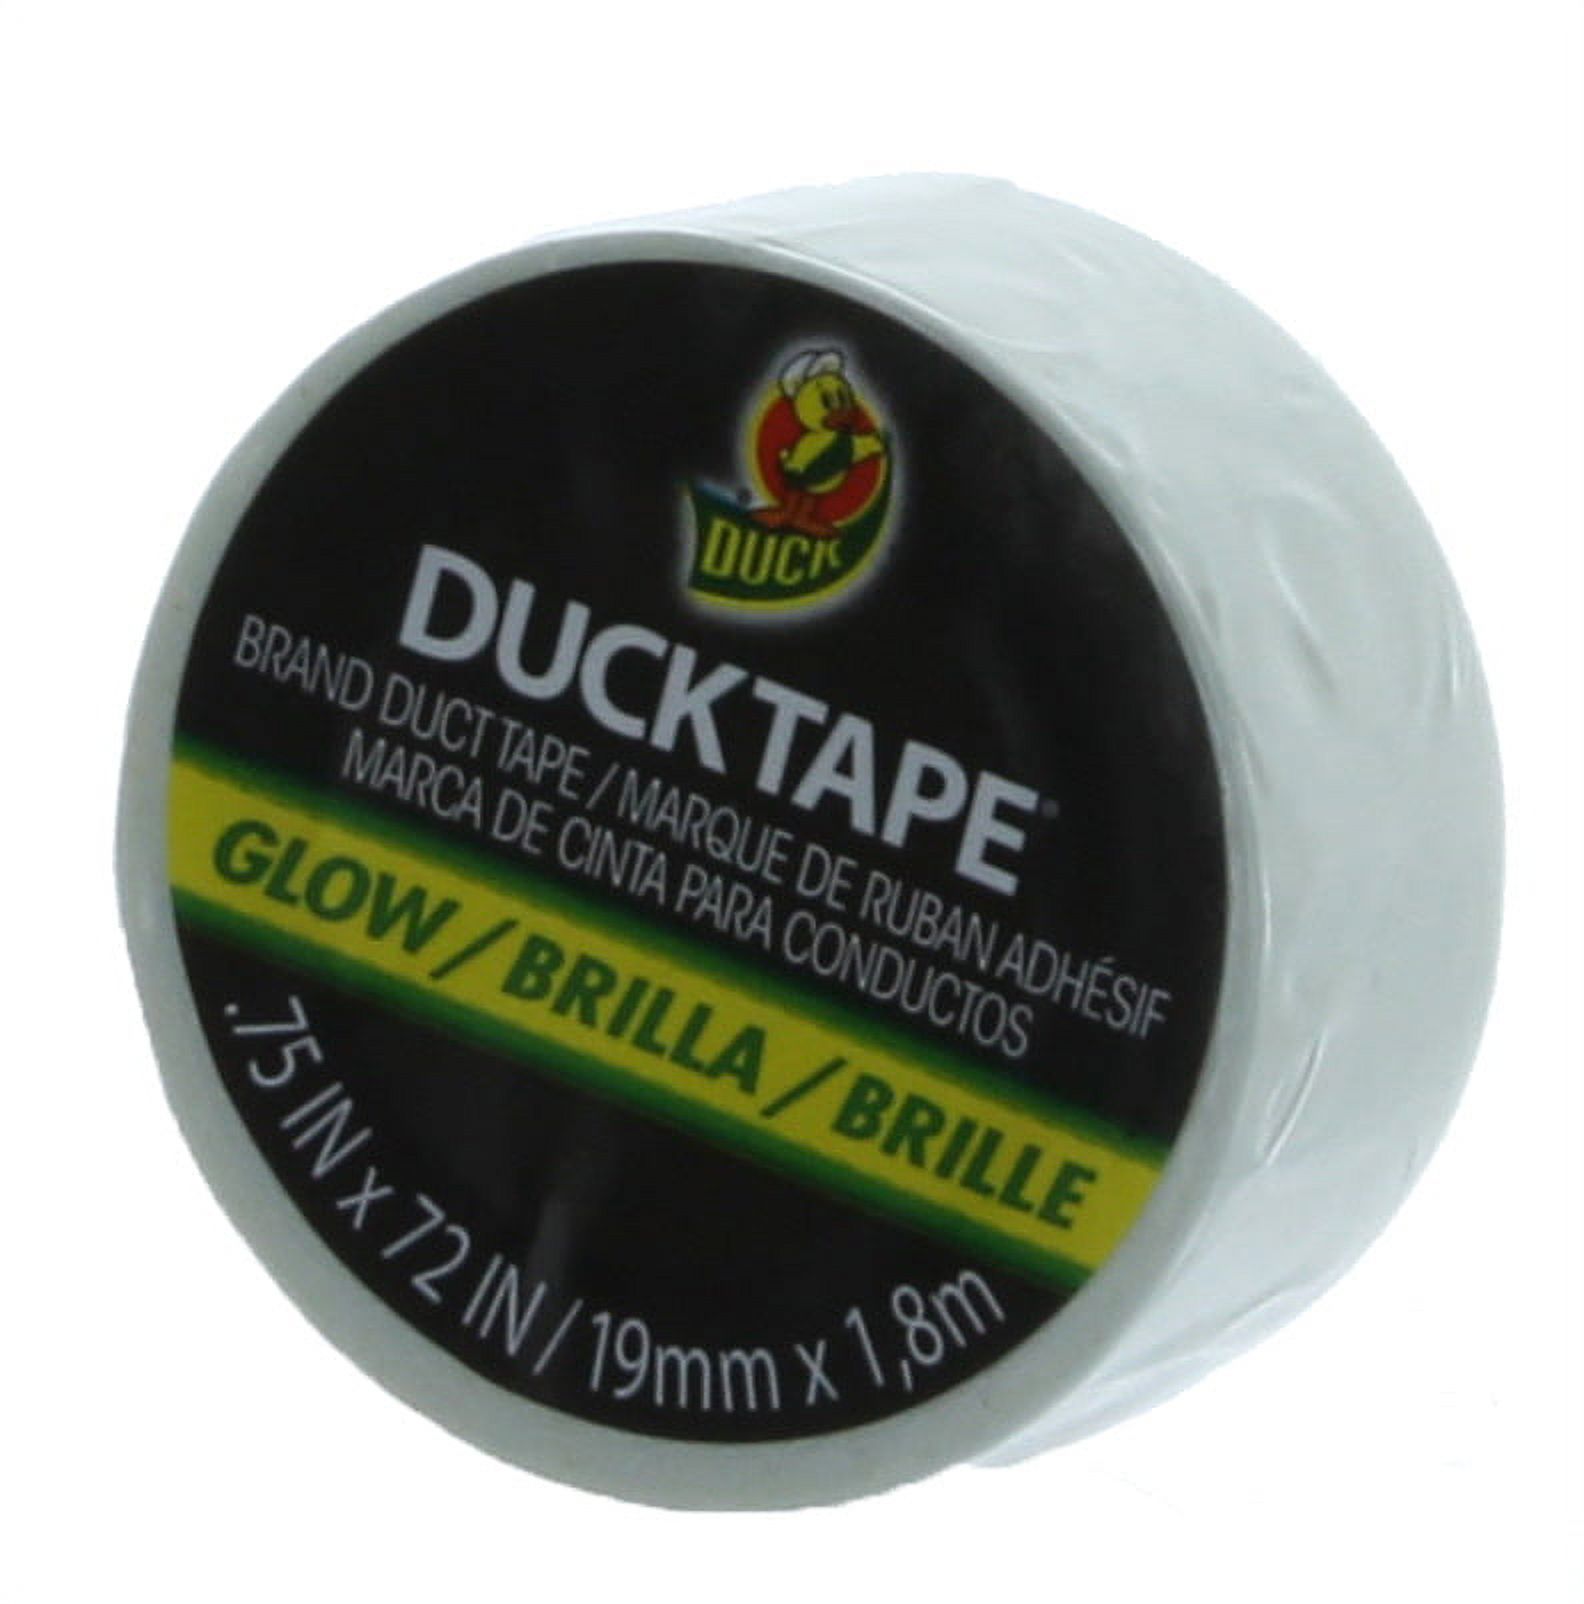 Lot of 2 Mini Duck Glow In The Dark ducktape Duct Tape 3/4 x 6